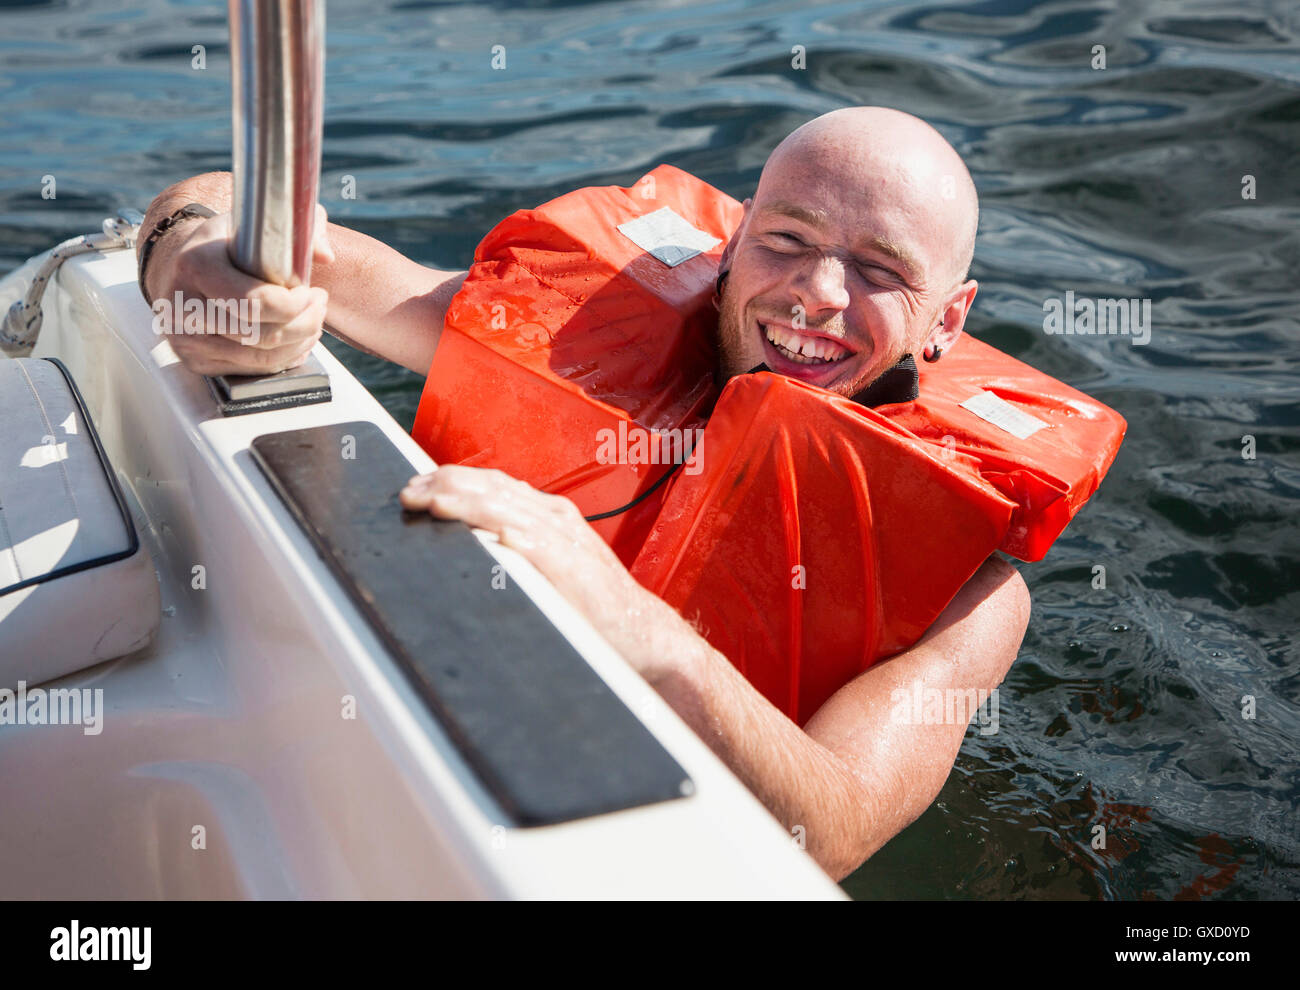 Man wearing lifejacket in water looking at camera smiling Stock Photo